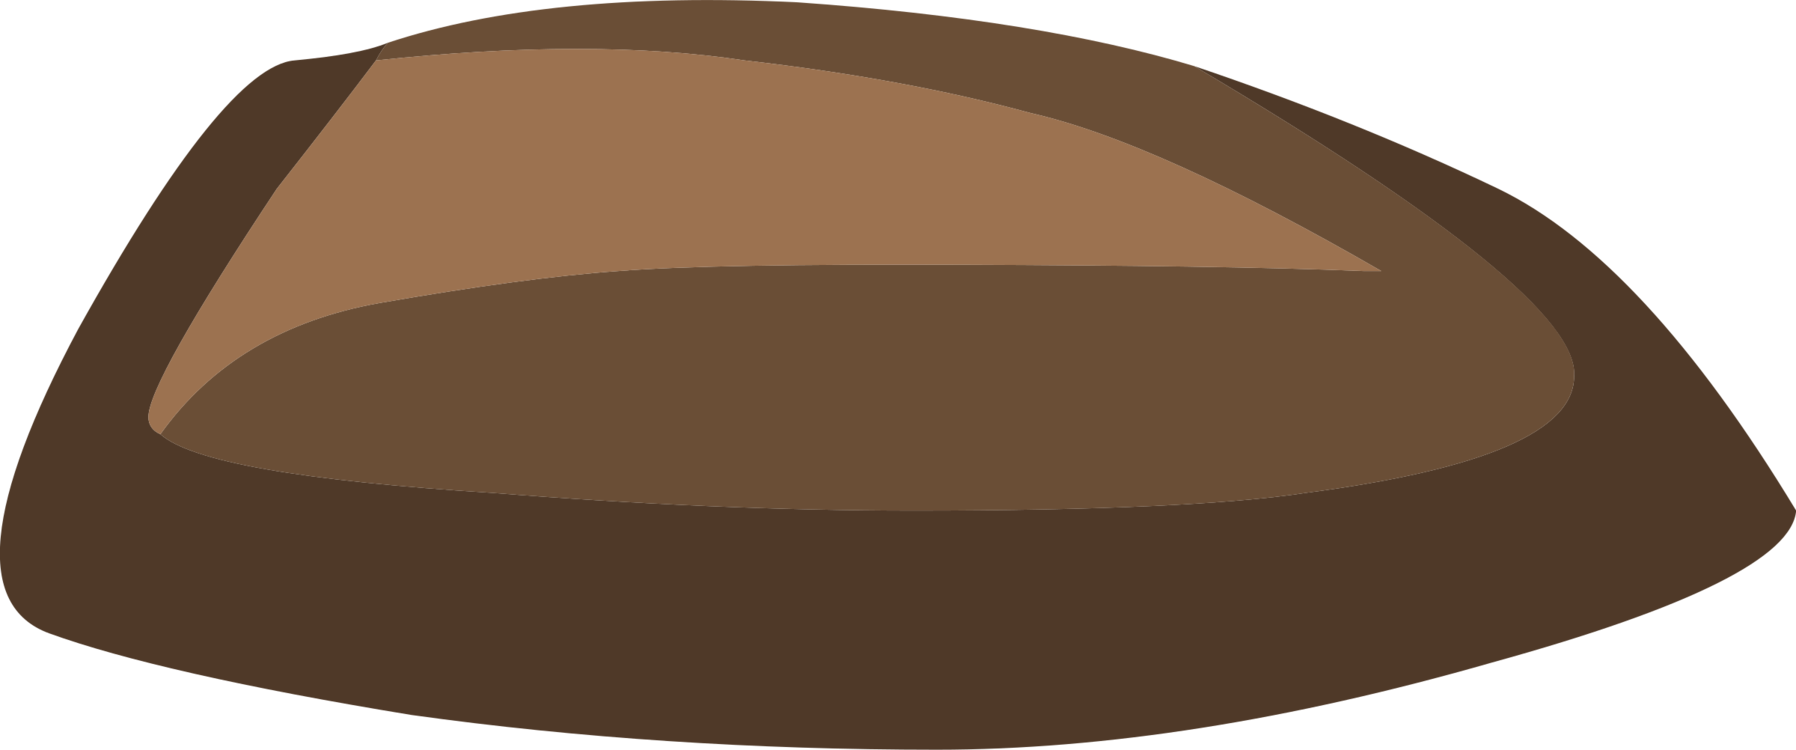 Brown,Circle,Hat